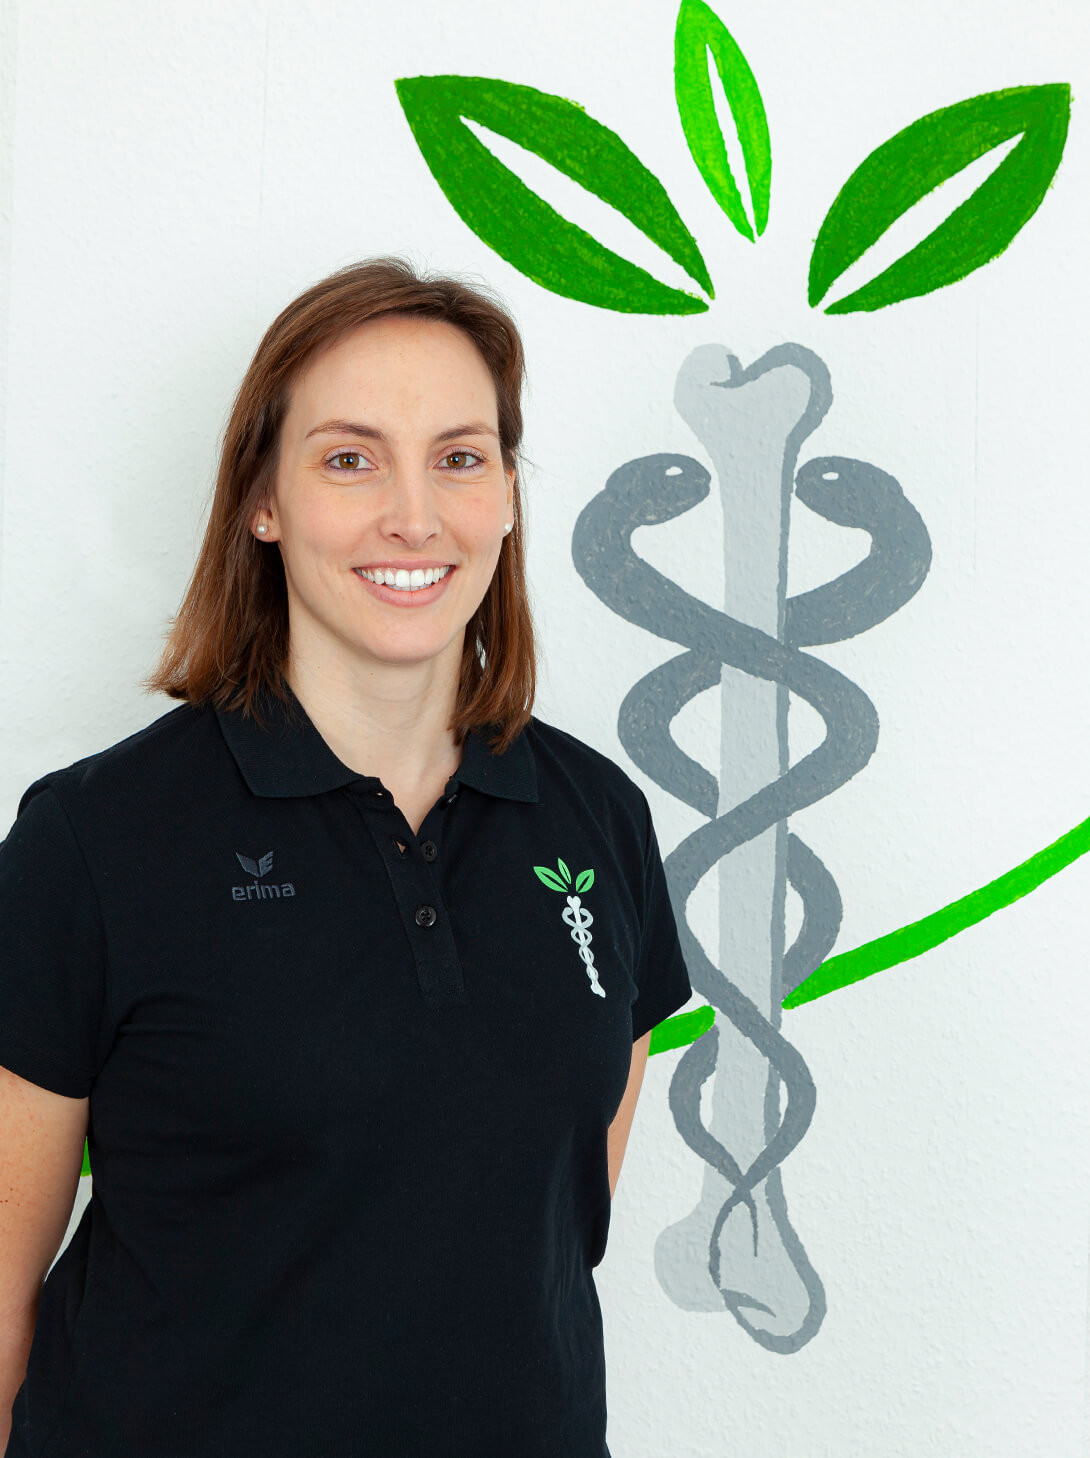 Gesundheitspraxis am Niederrhein : Christina Bengs, Physiotherapeutin